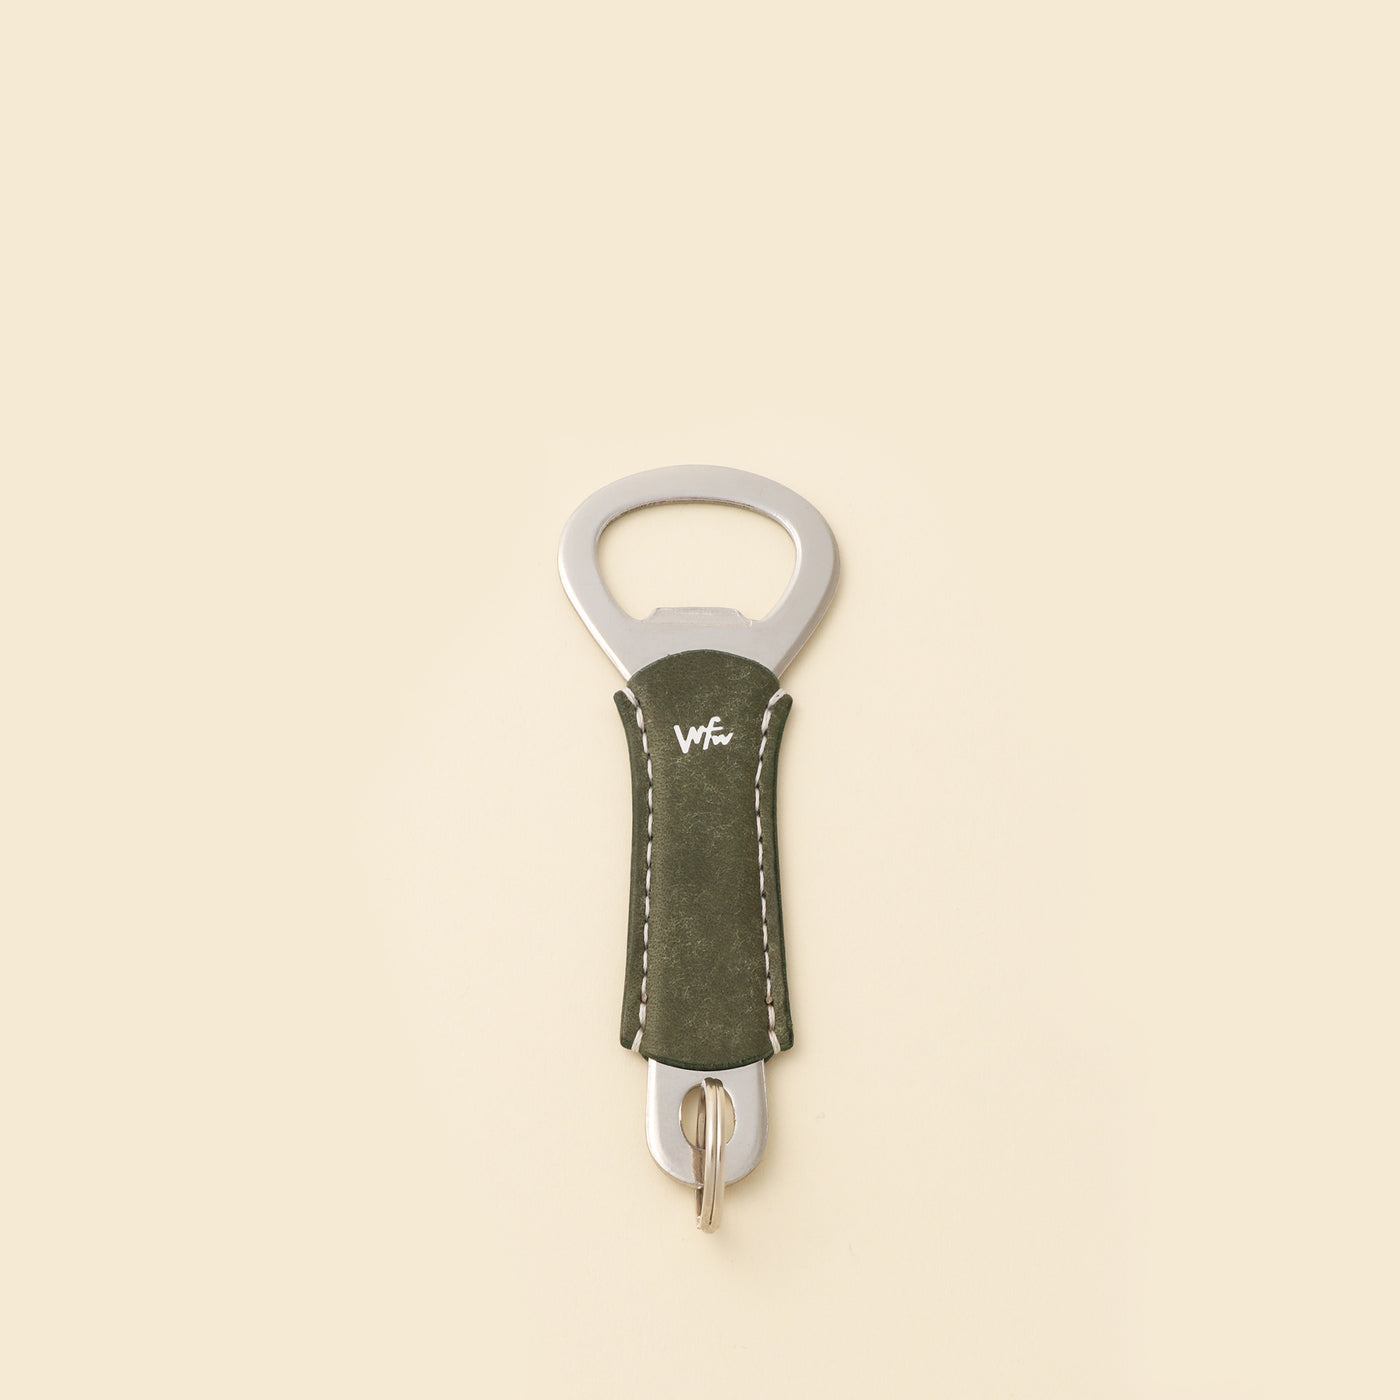 <Mojakawa> Bottle opener key ring / Nero